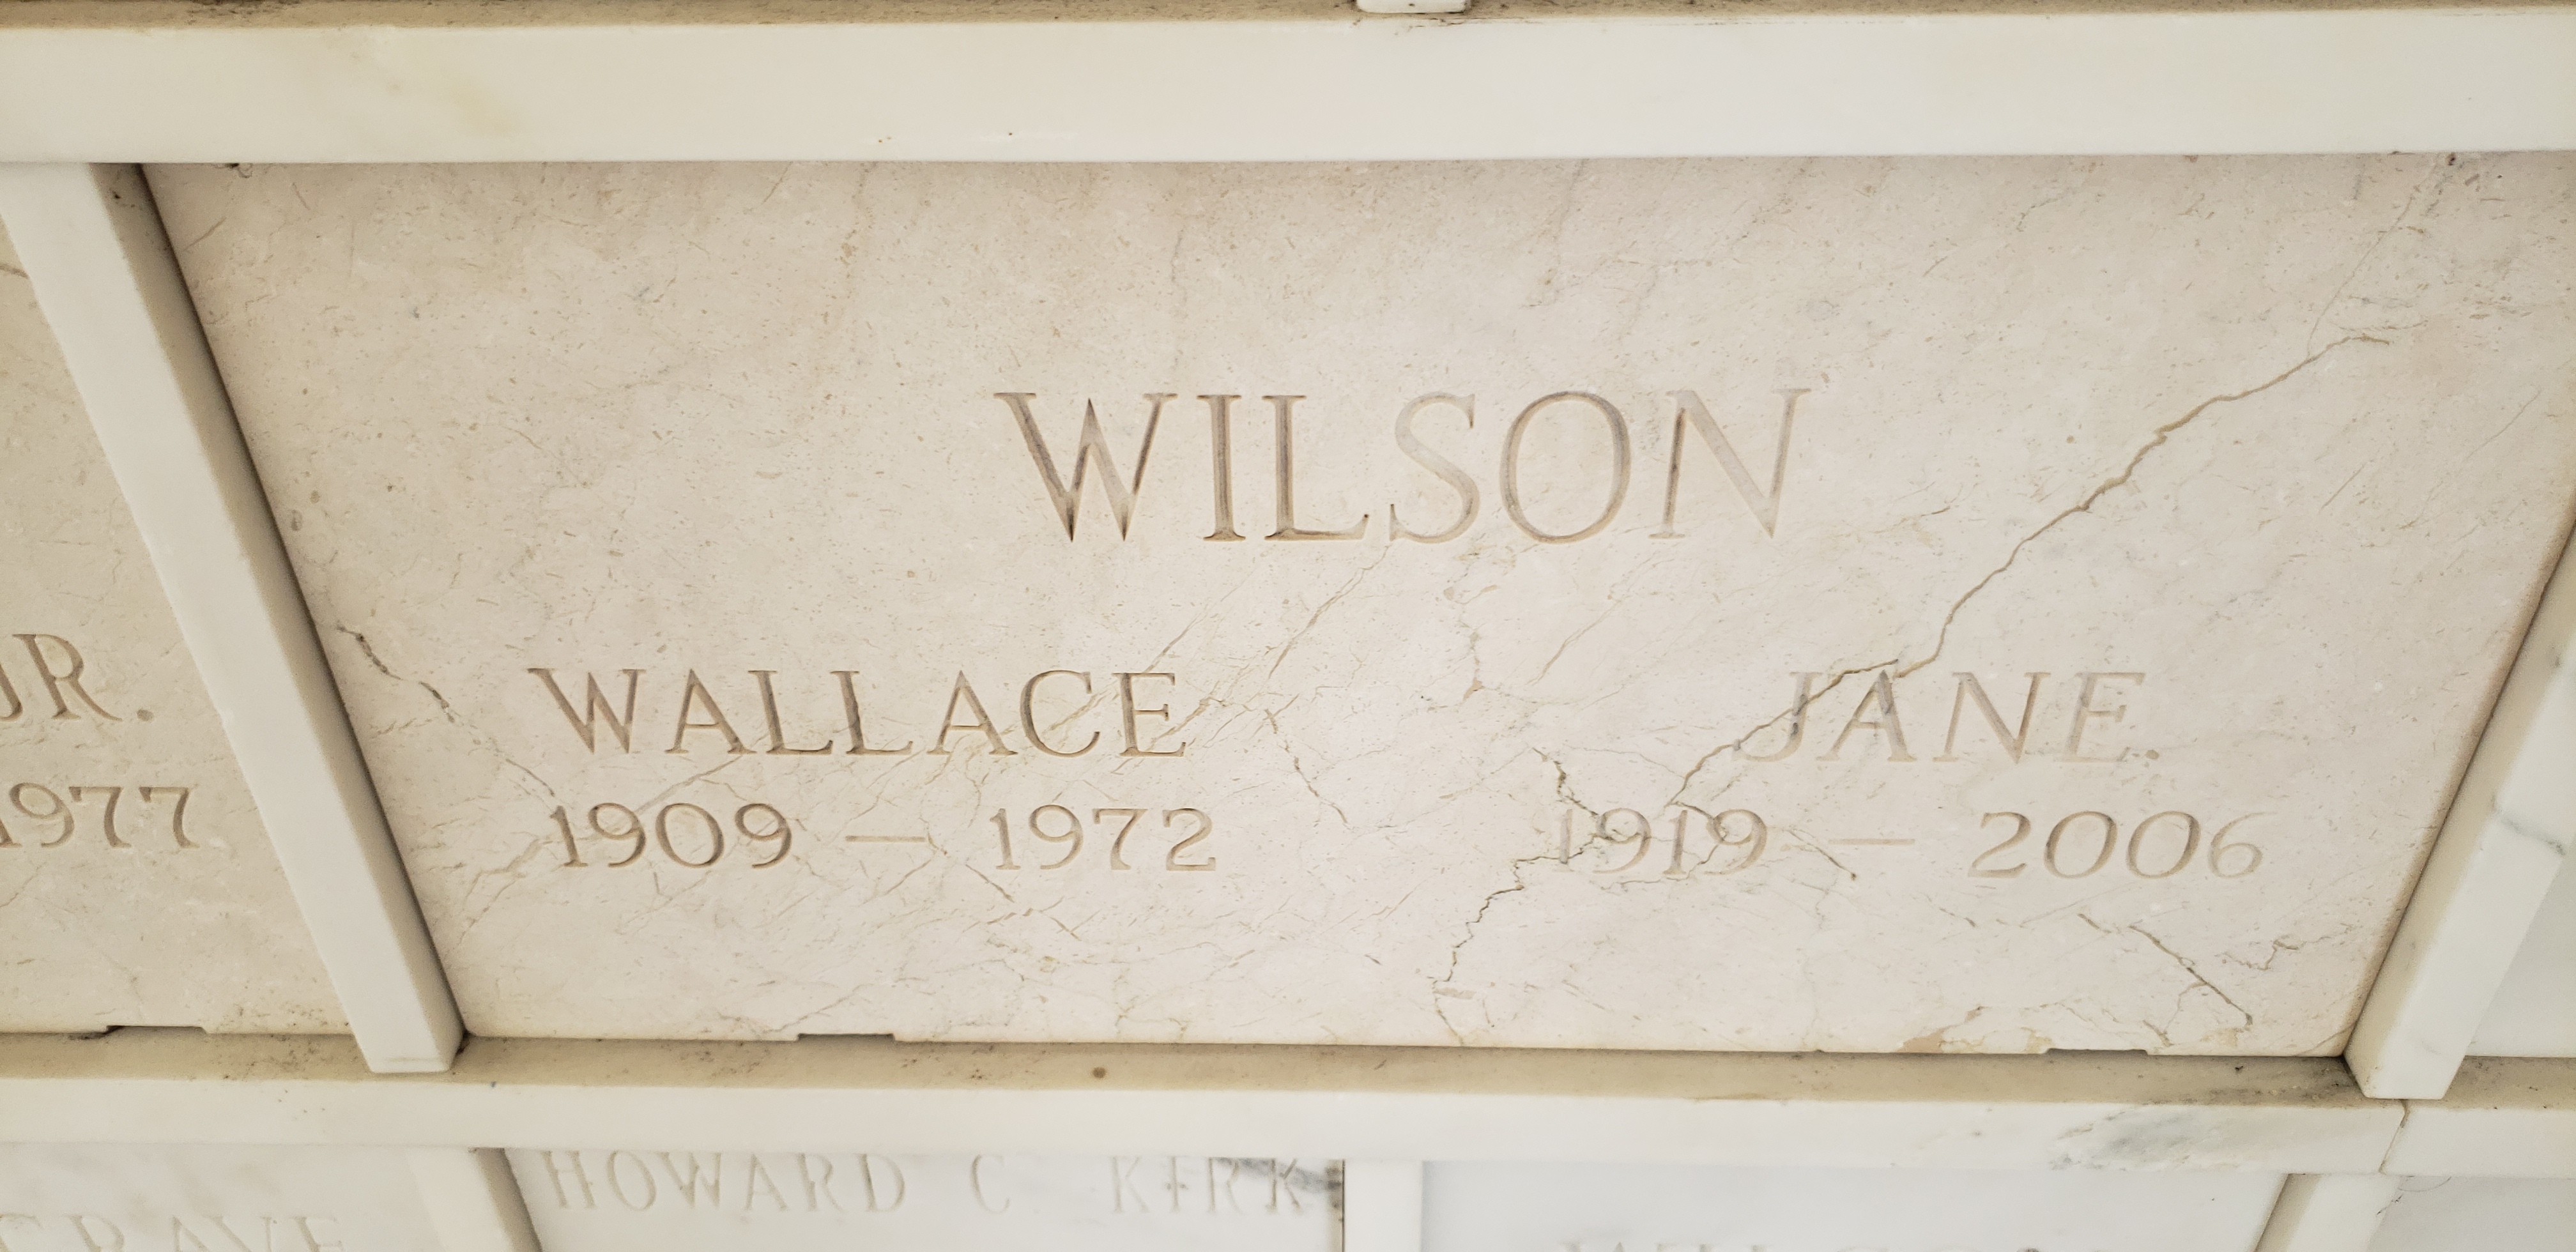 Wallace Wilson